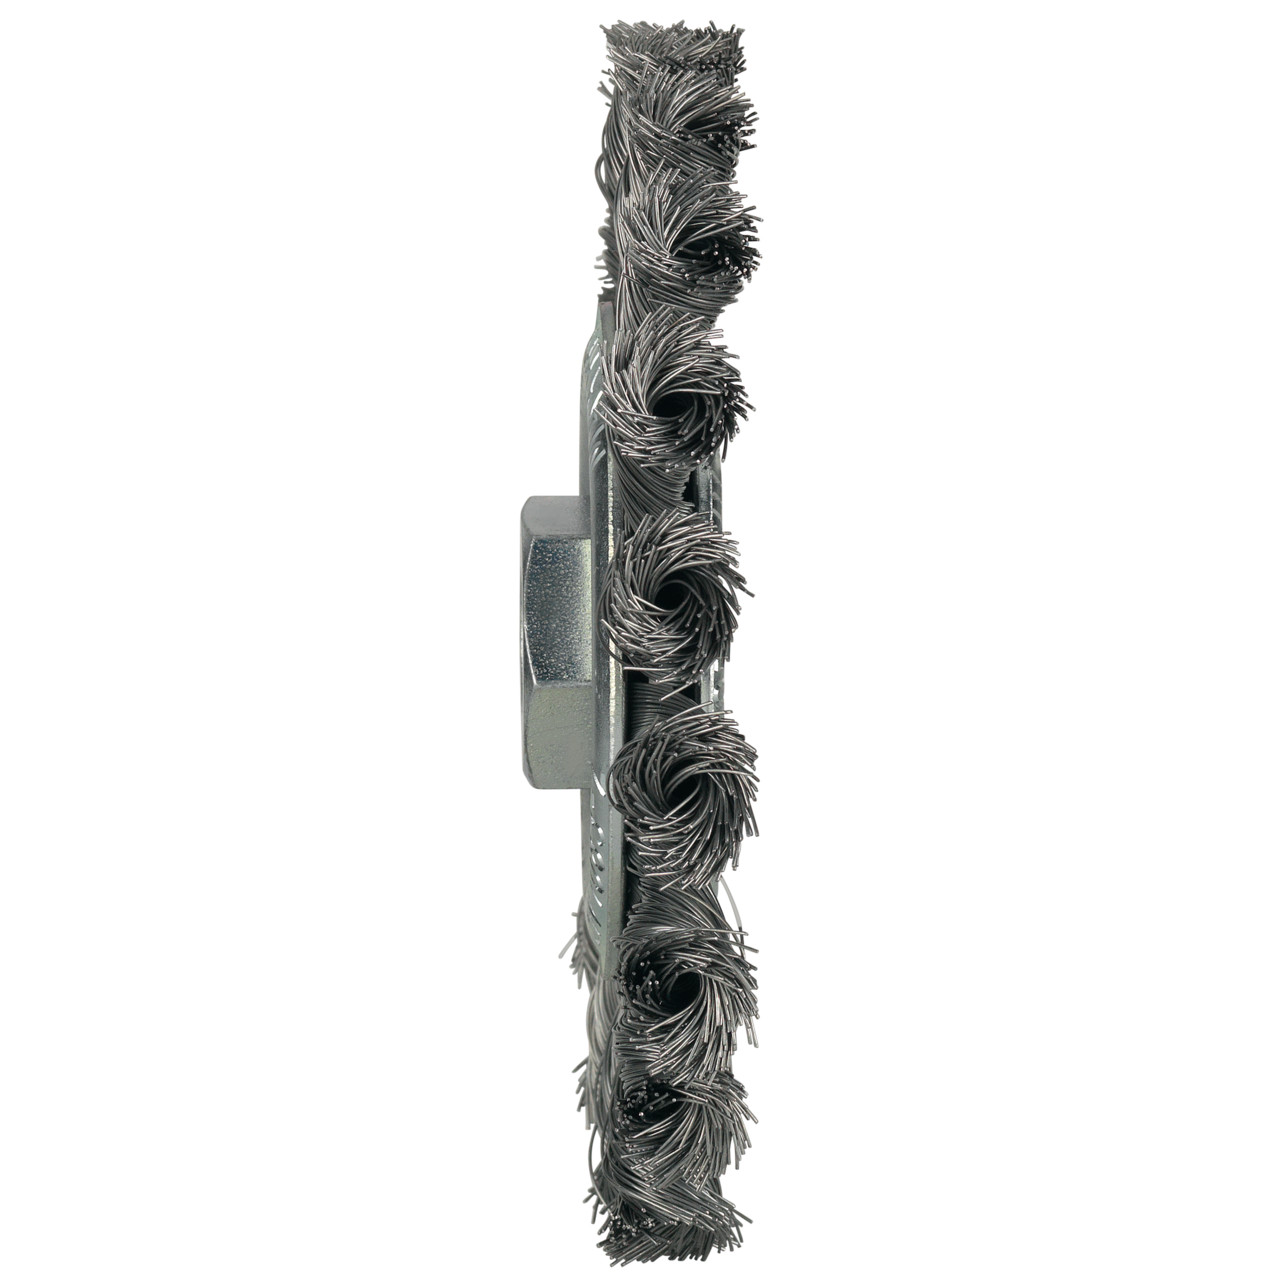 Spazzole rotonde Tyrolit DxLxH 178x15x44x22.2 Per acciaio, forma: 1RDZ - (spazzola rotonda), Art. 34276003